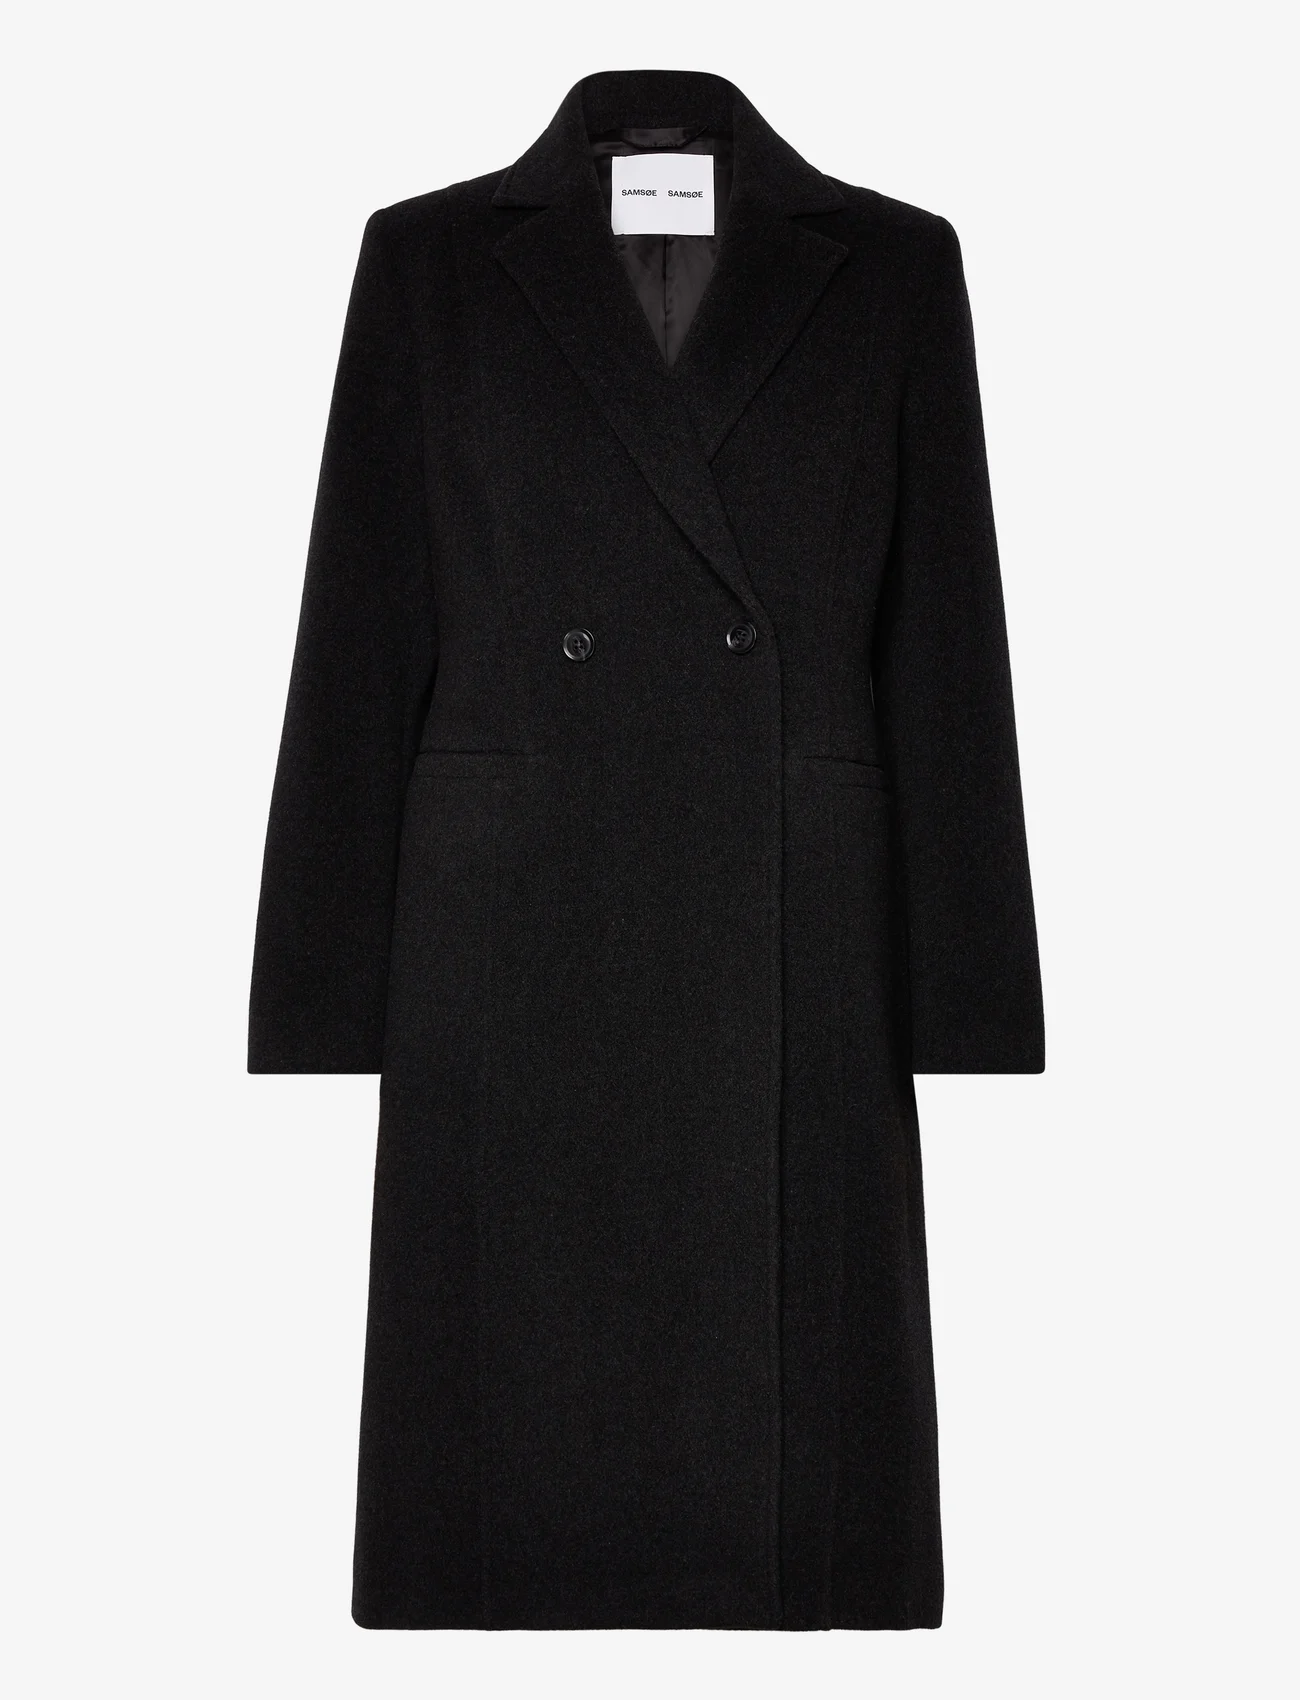 Samsøe Samsøe - Yamilla coat 11104 - winter jacket - phantom - 0